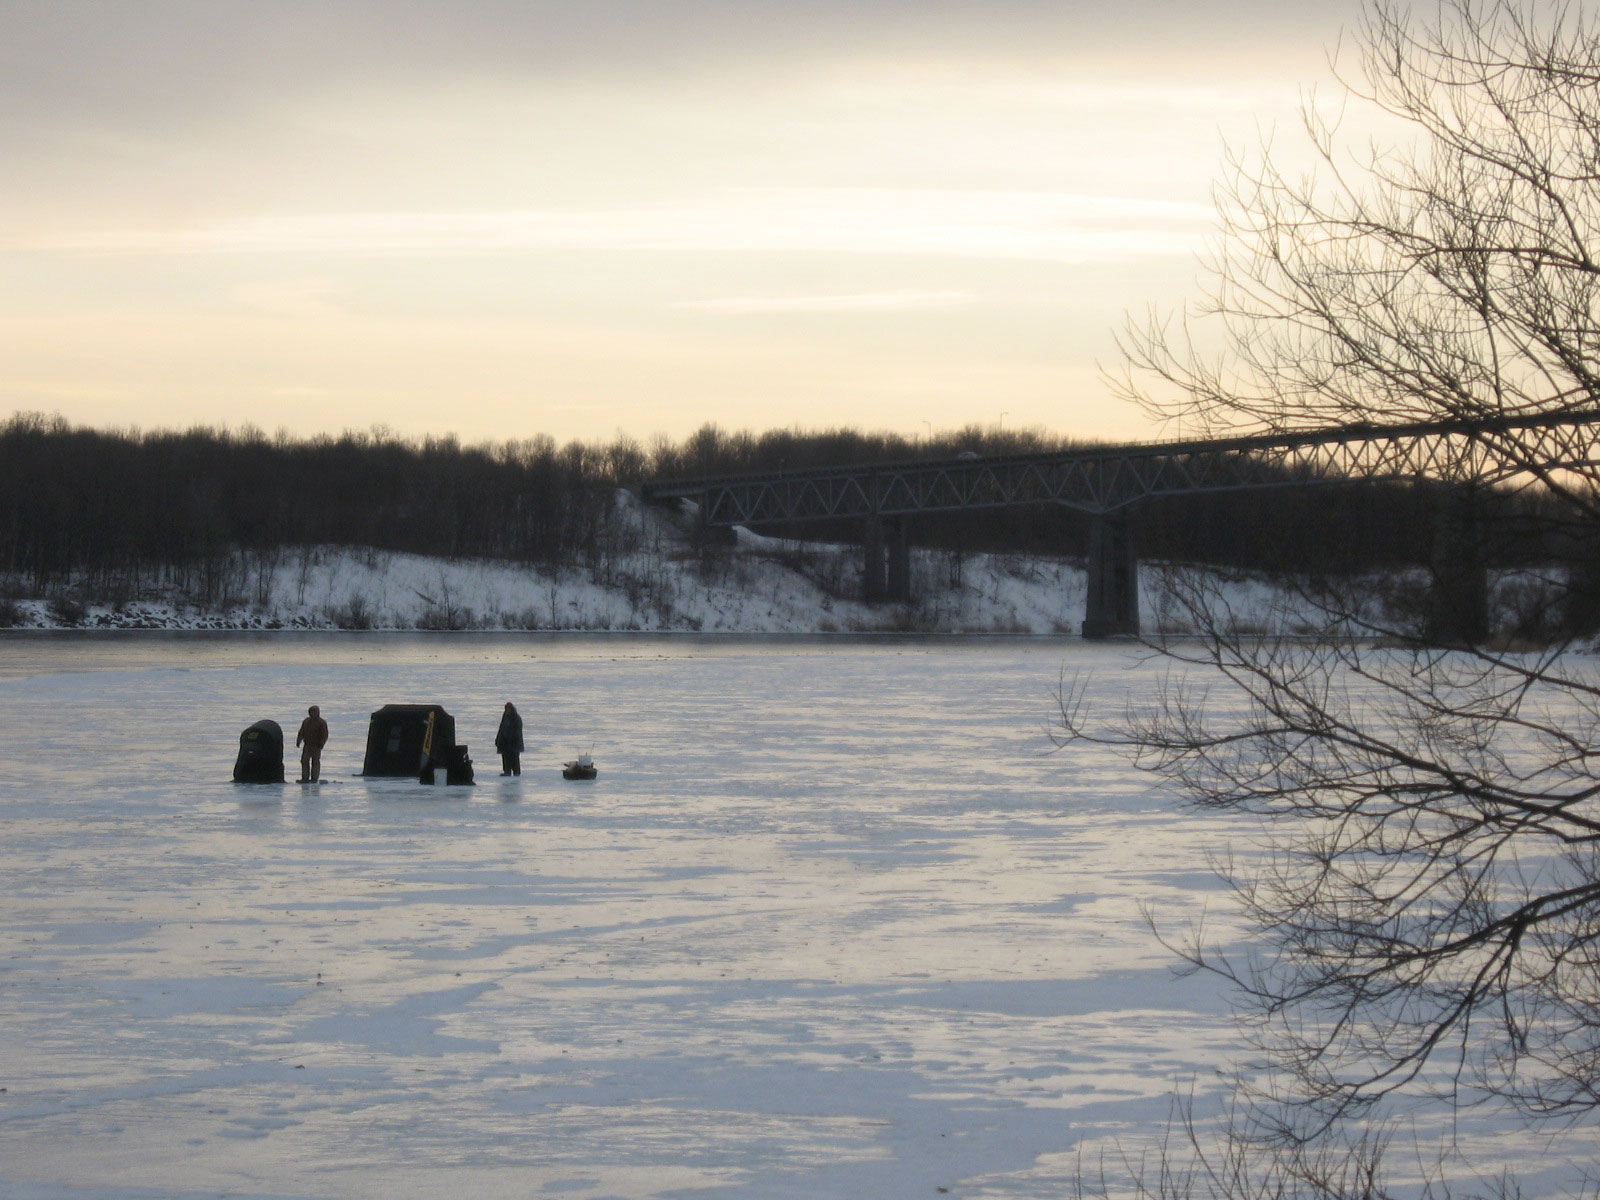 SNAPSHOT - Enjoying some ice fishing on the St. Lawrence